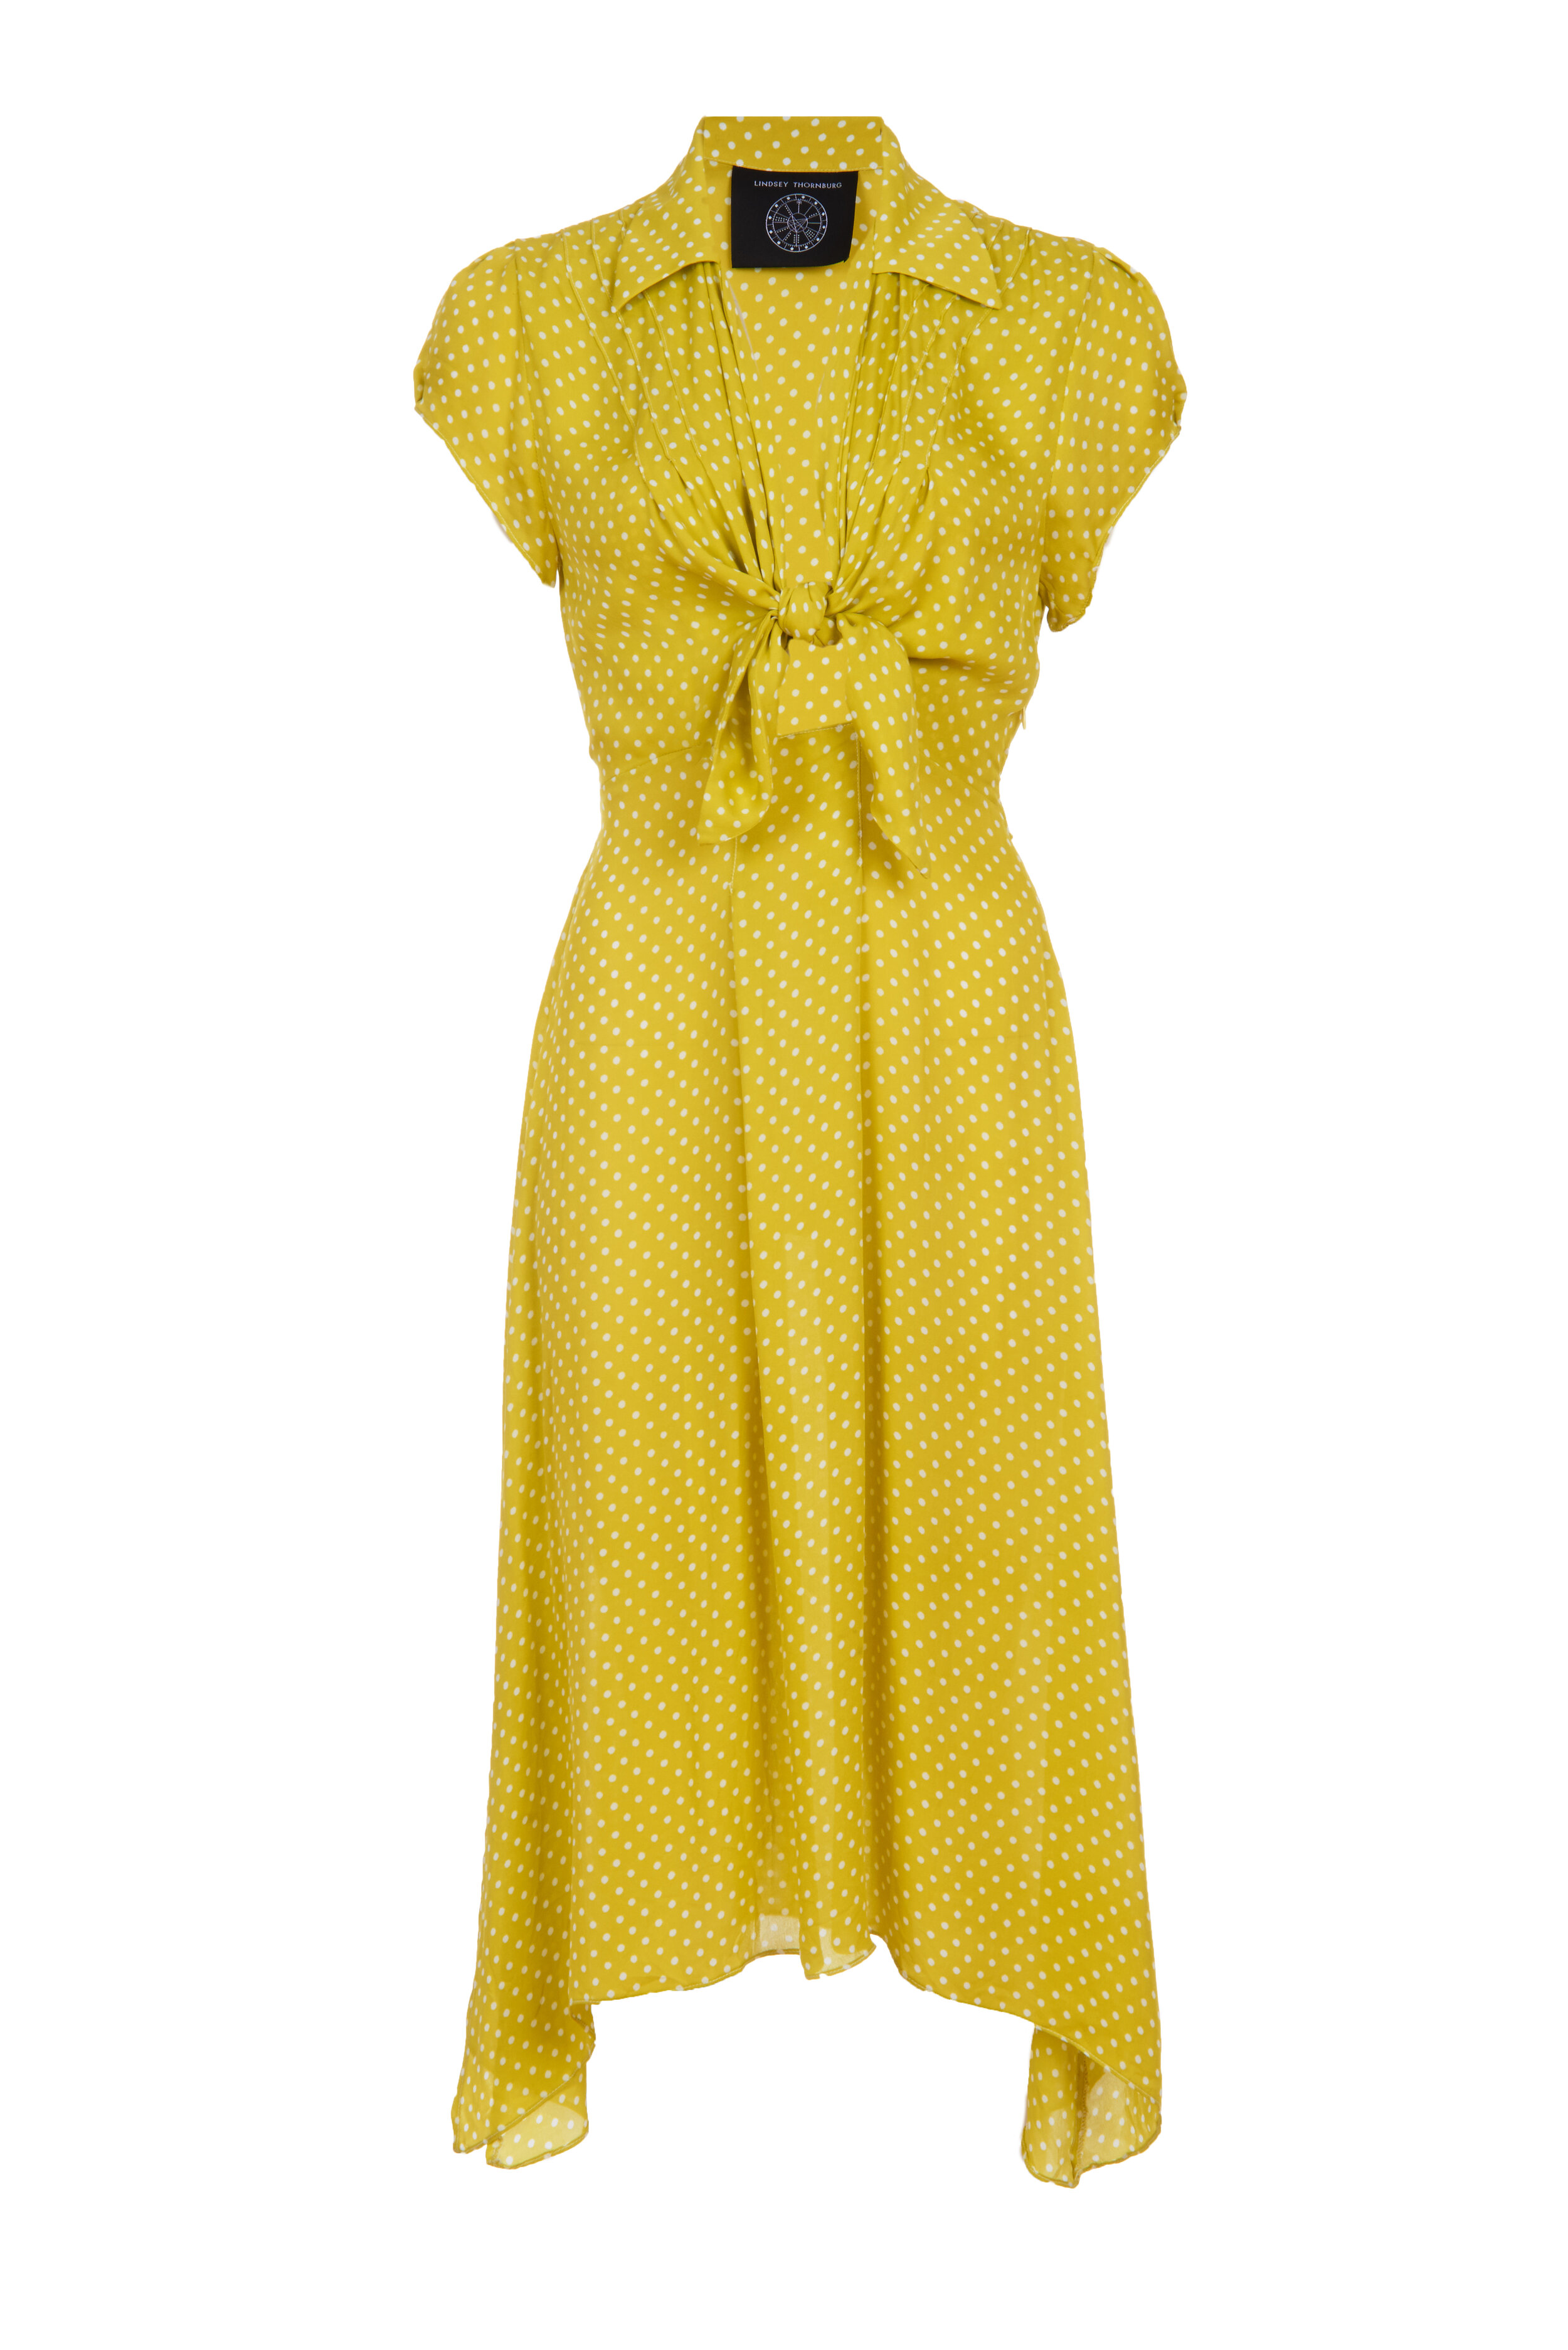 Polka Dot Yellow Dress